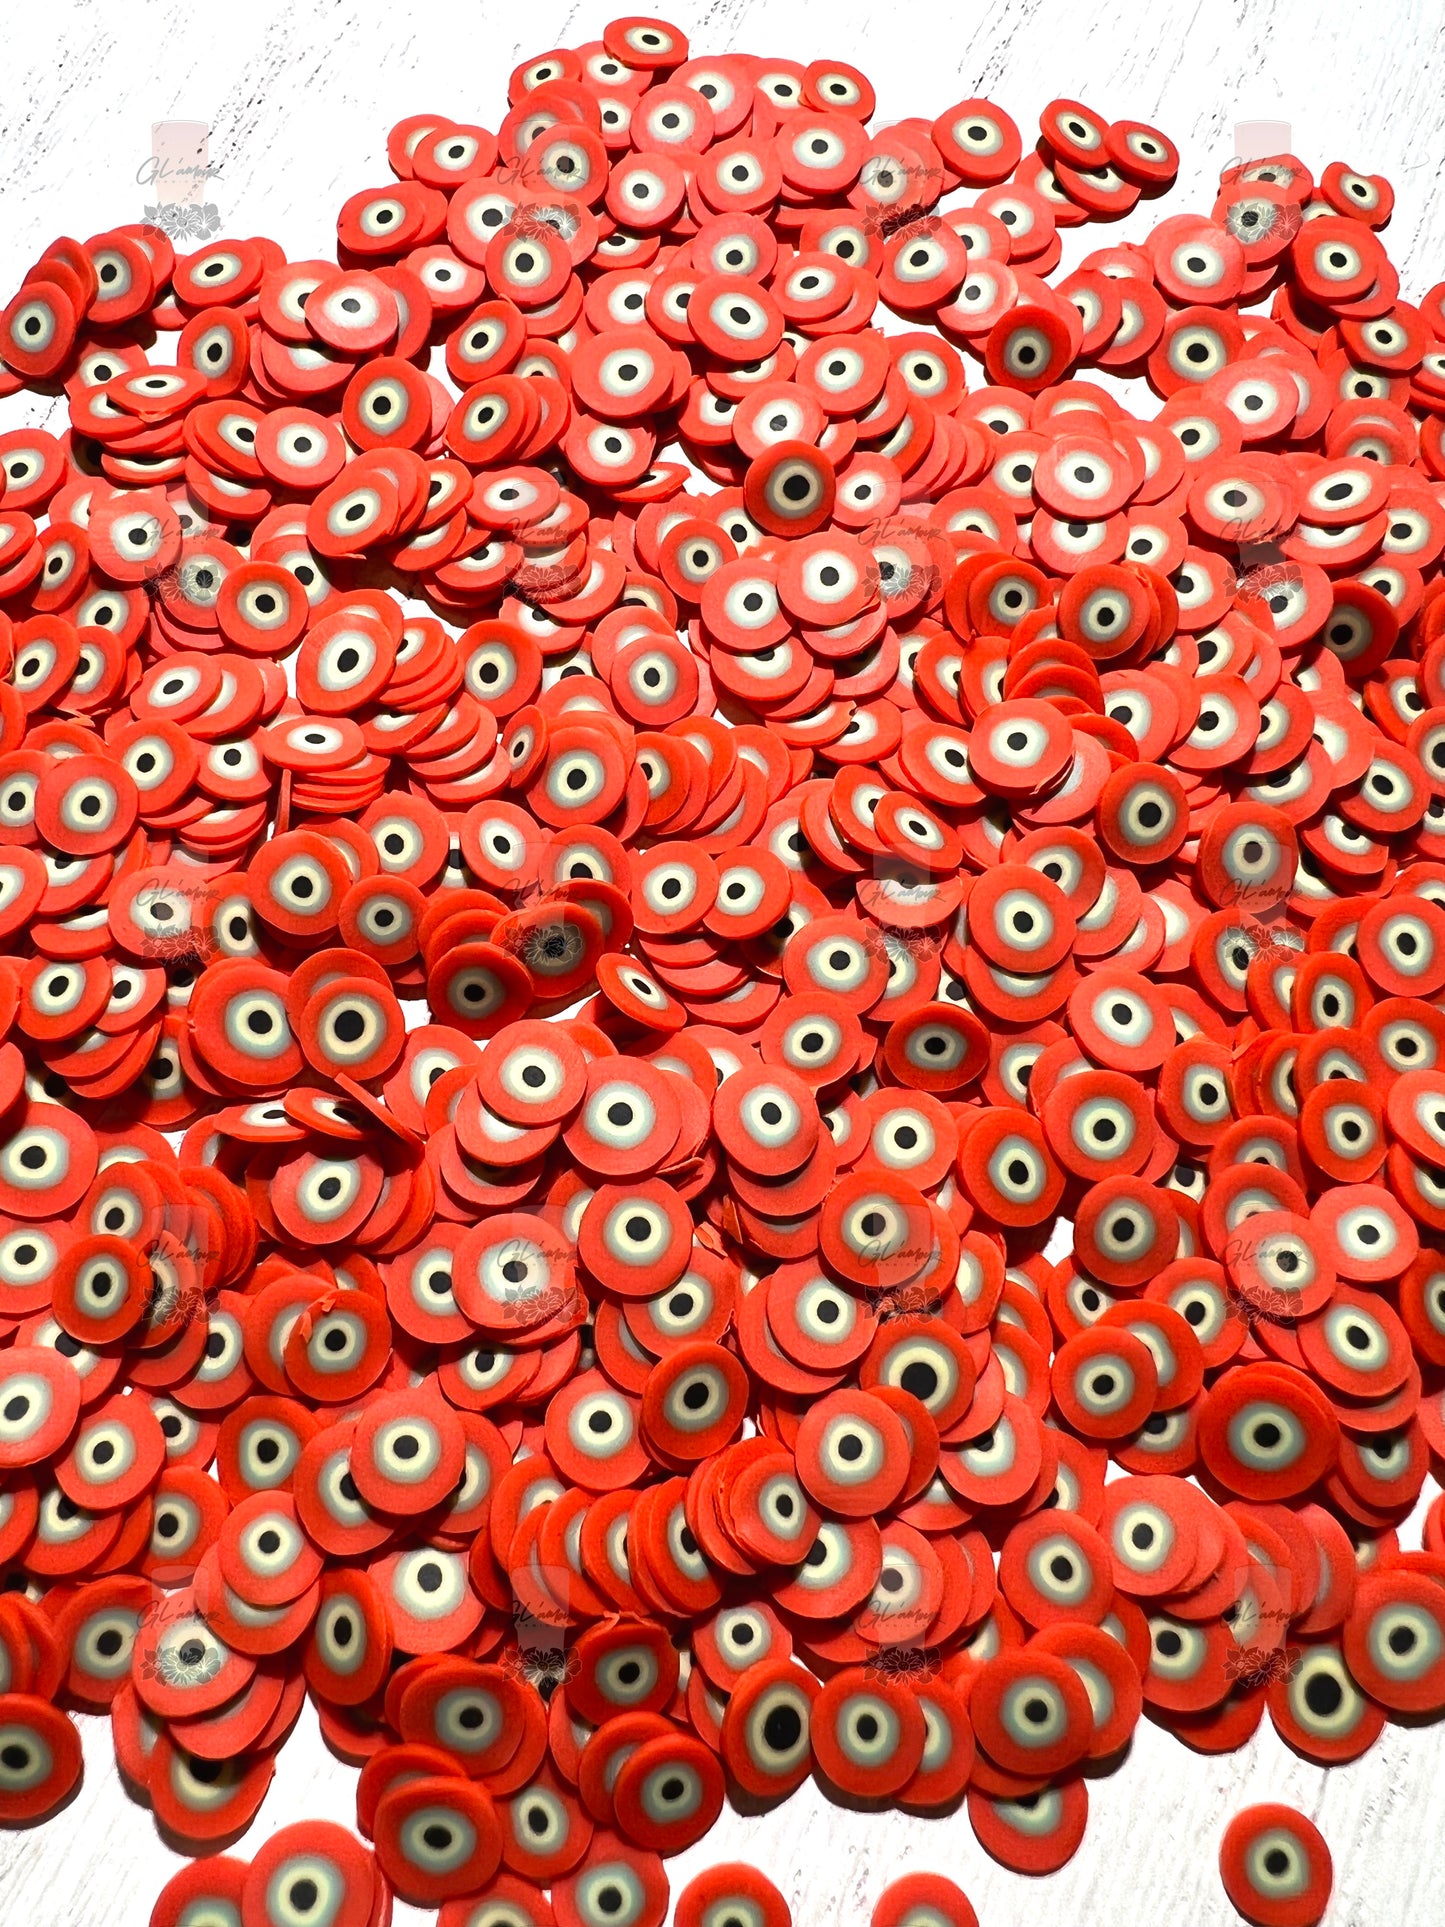 5mm Red-Orange Ojo (Eyeball) Polymer Slices -small